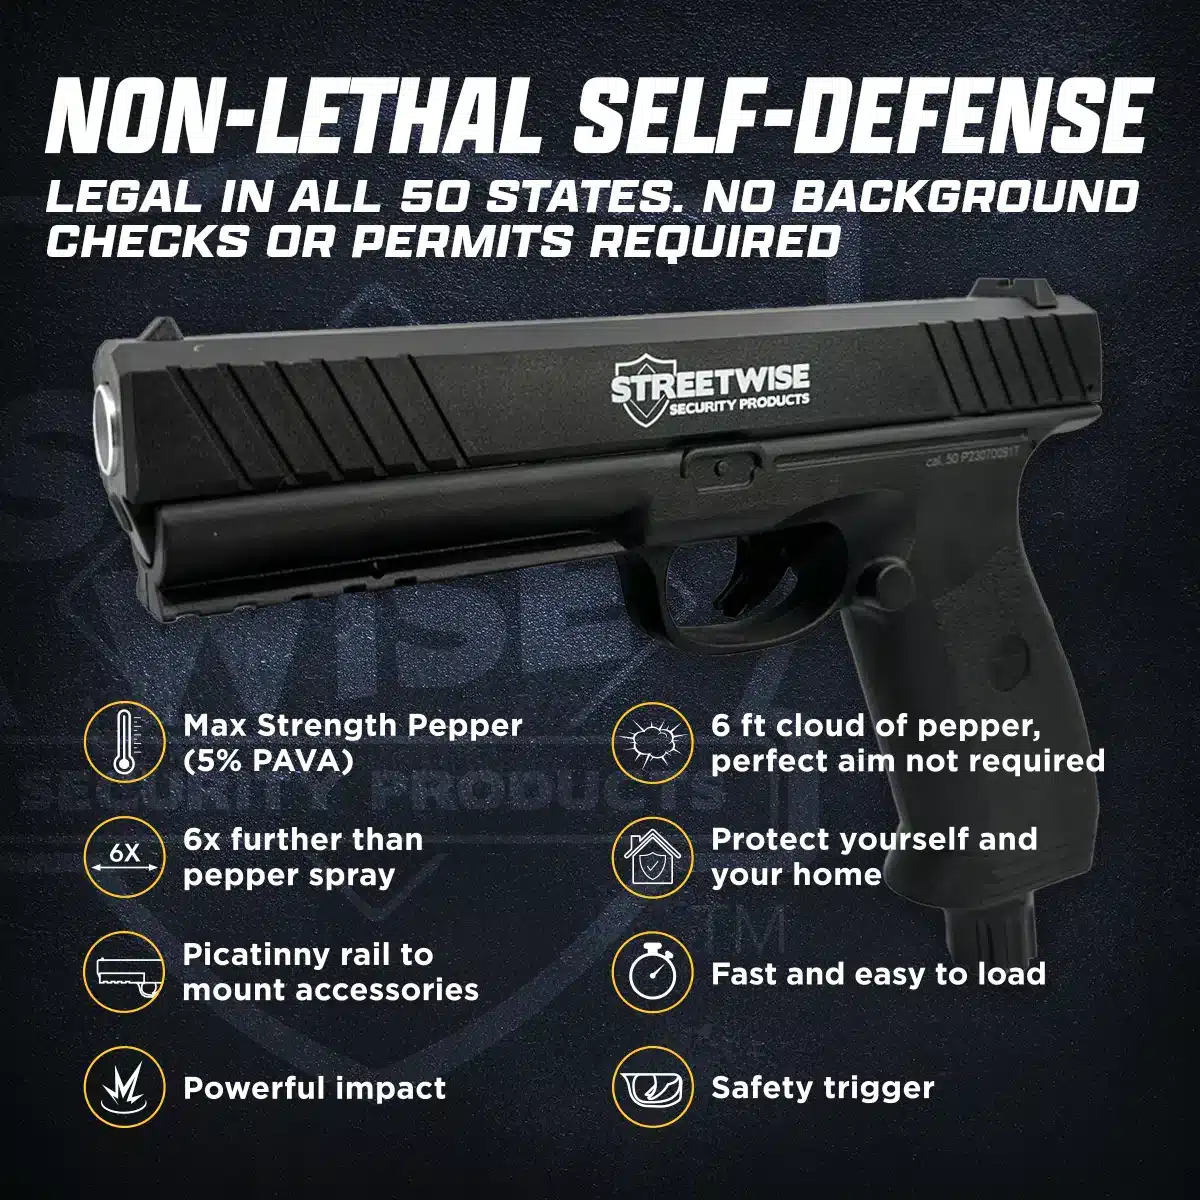 Police-Strength Pepper Spray/Stun Gun Self-Defense Kit